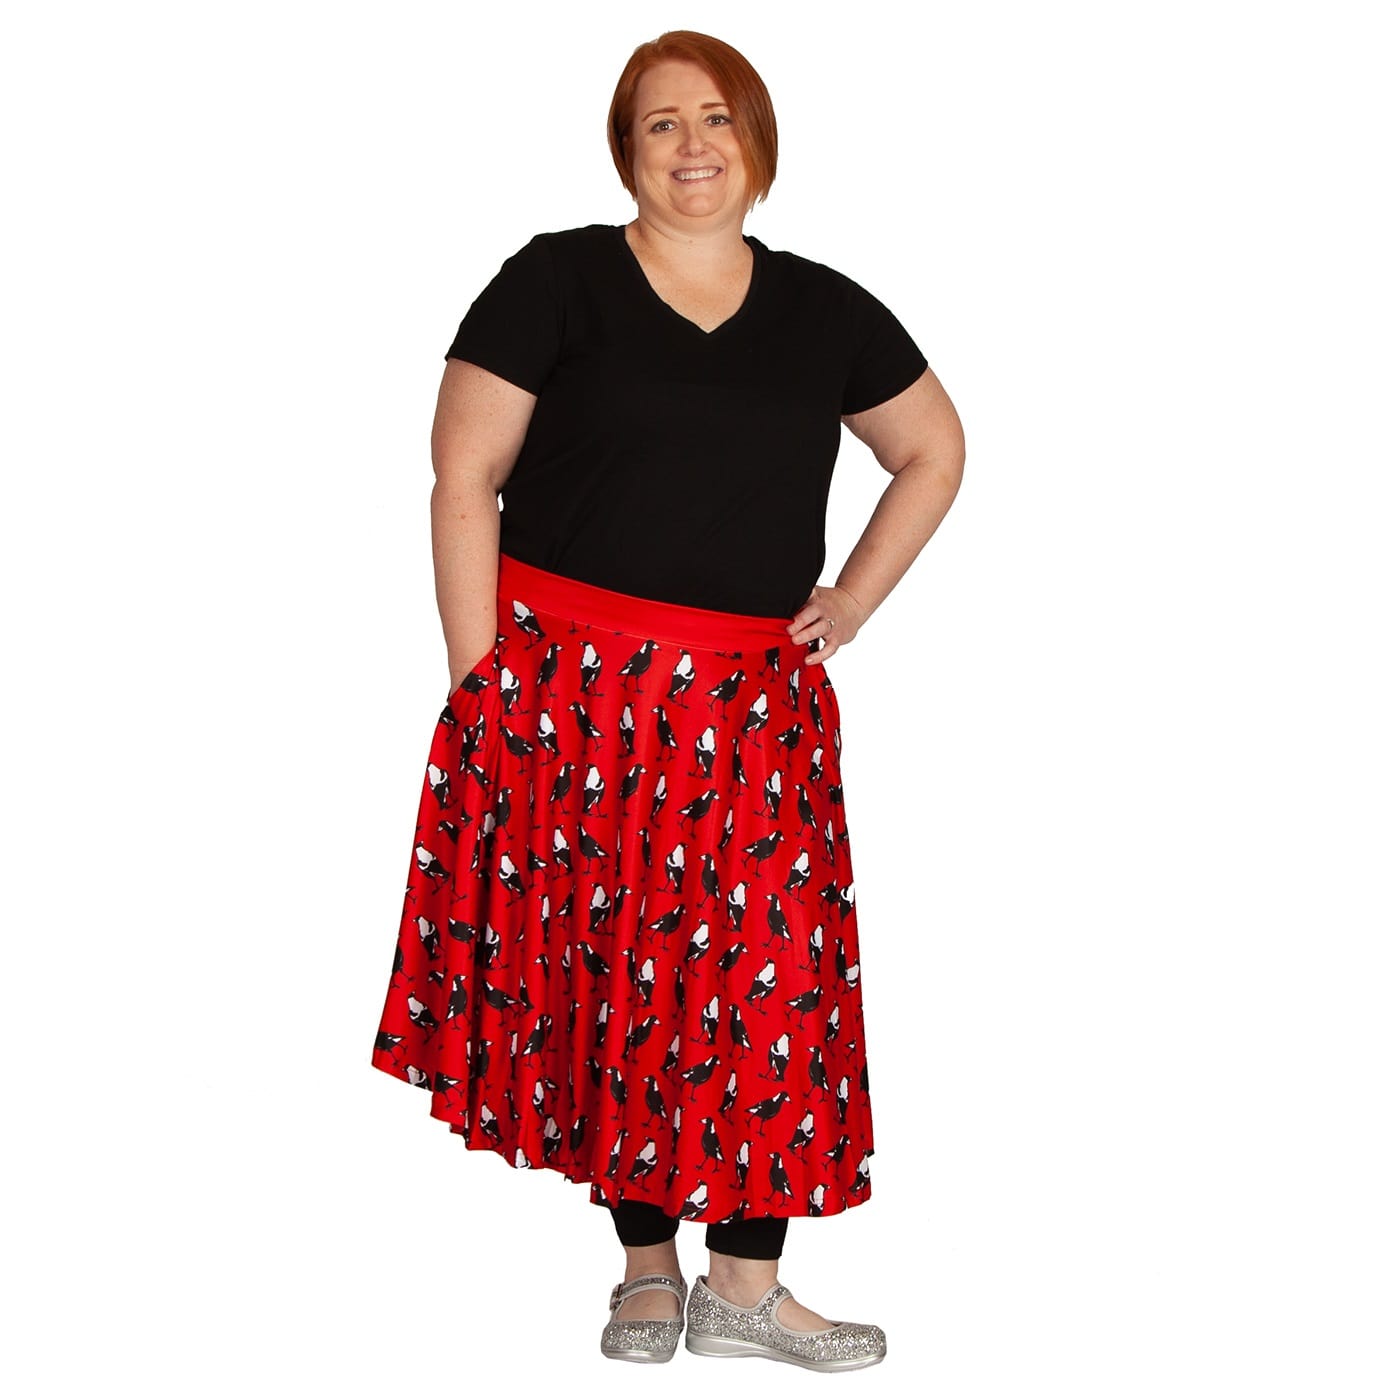 Charm Swishy Skirt by RainbowsAndFairies.com.au (Magpie - Red Black & White - Animal Print - Australian Bird - Circle Skirt With Pockets - Mod Retro) - SKU: CL_SWISH_CHARM_ORG - Pic-07